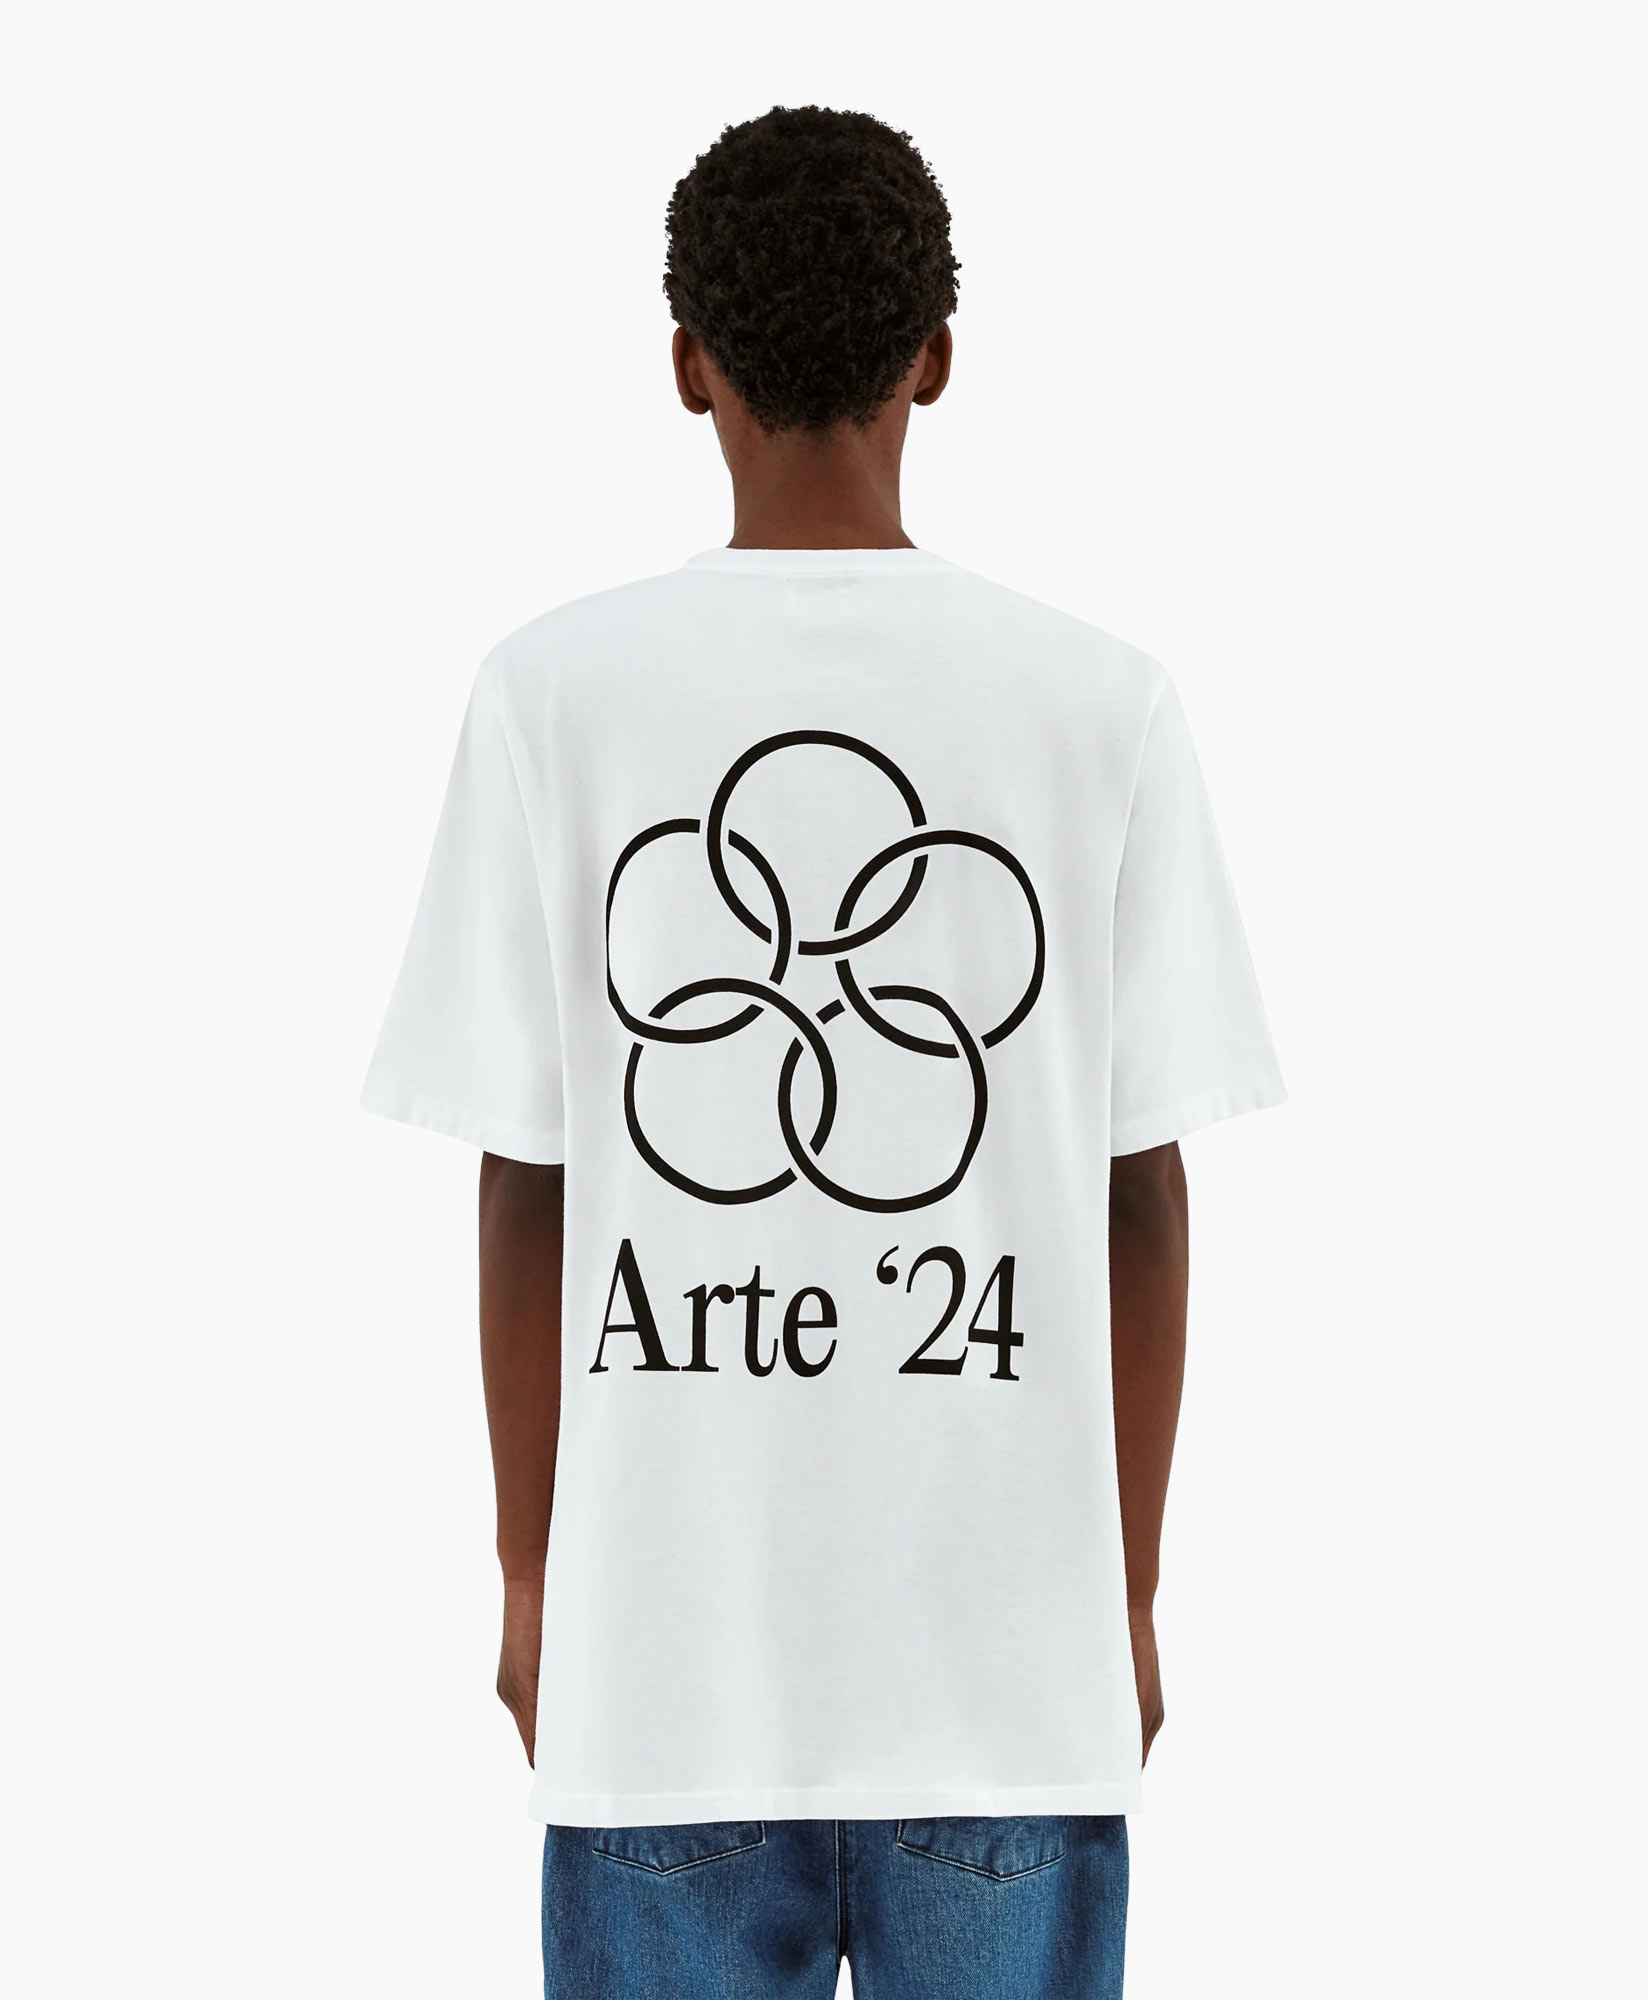 T-shirt Korte Mouw Arte'24 Circles Back Wit